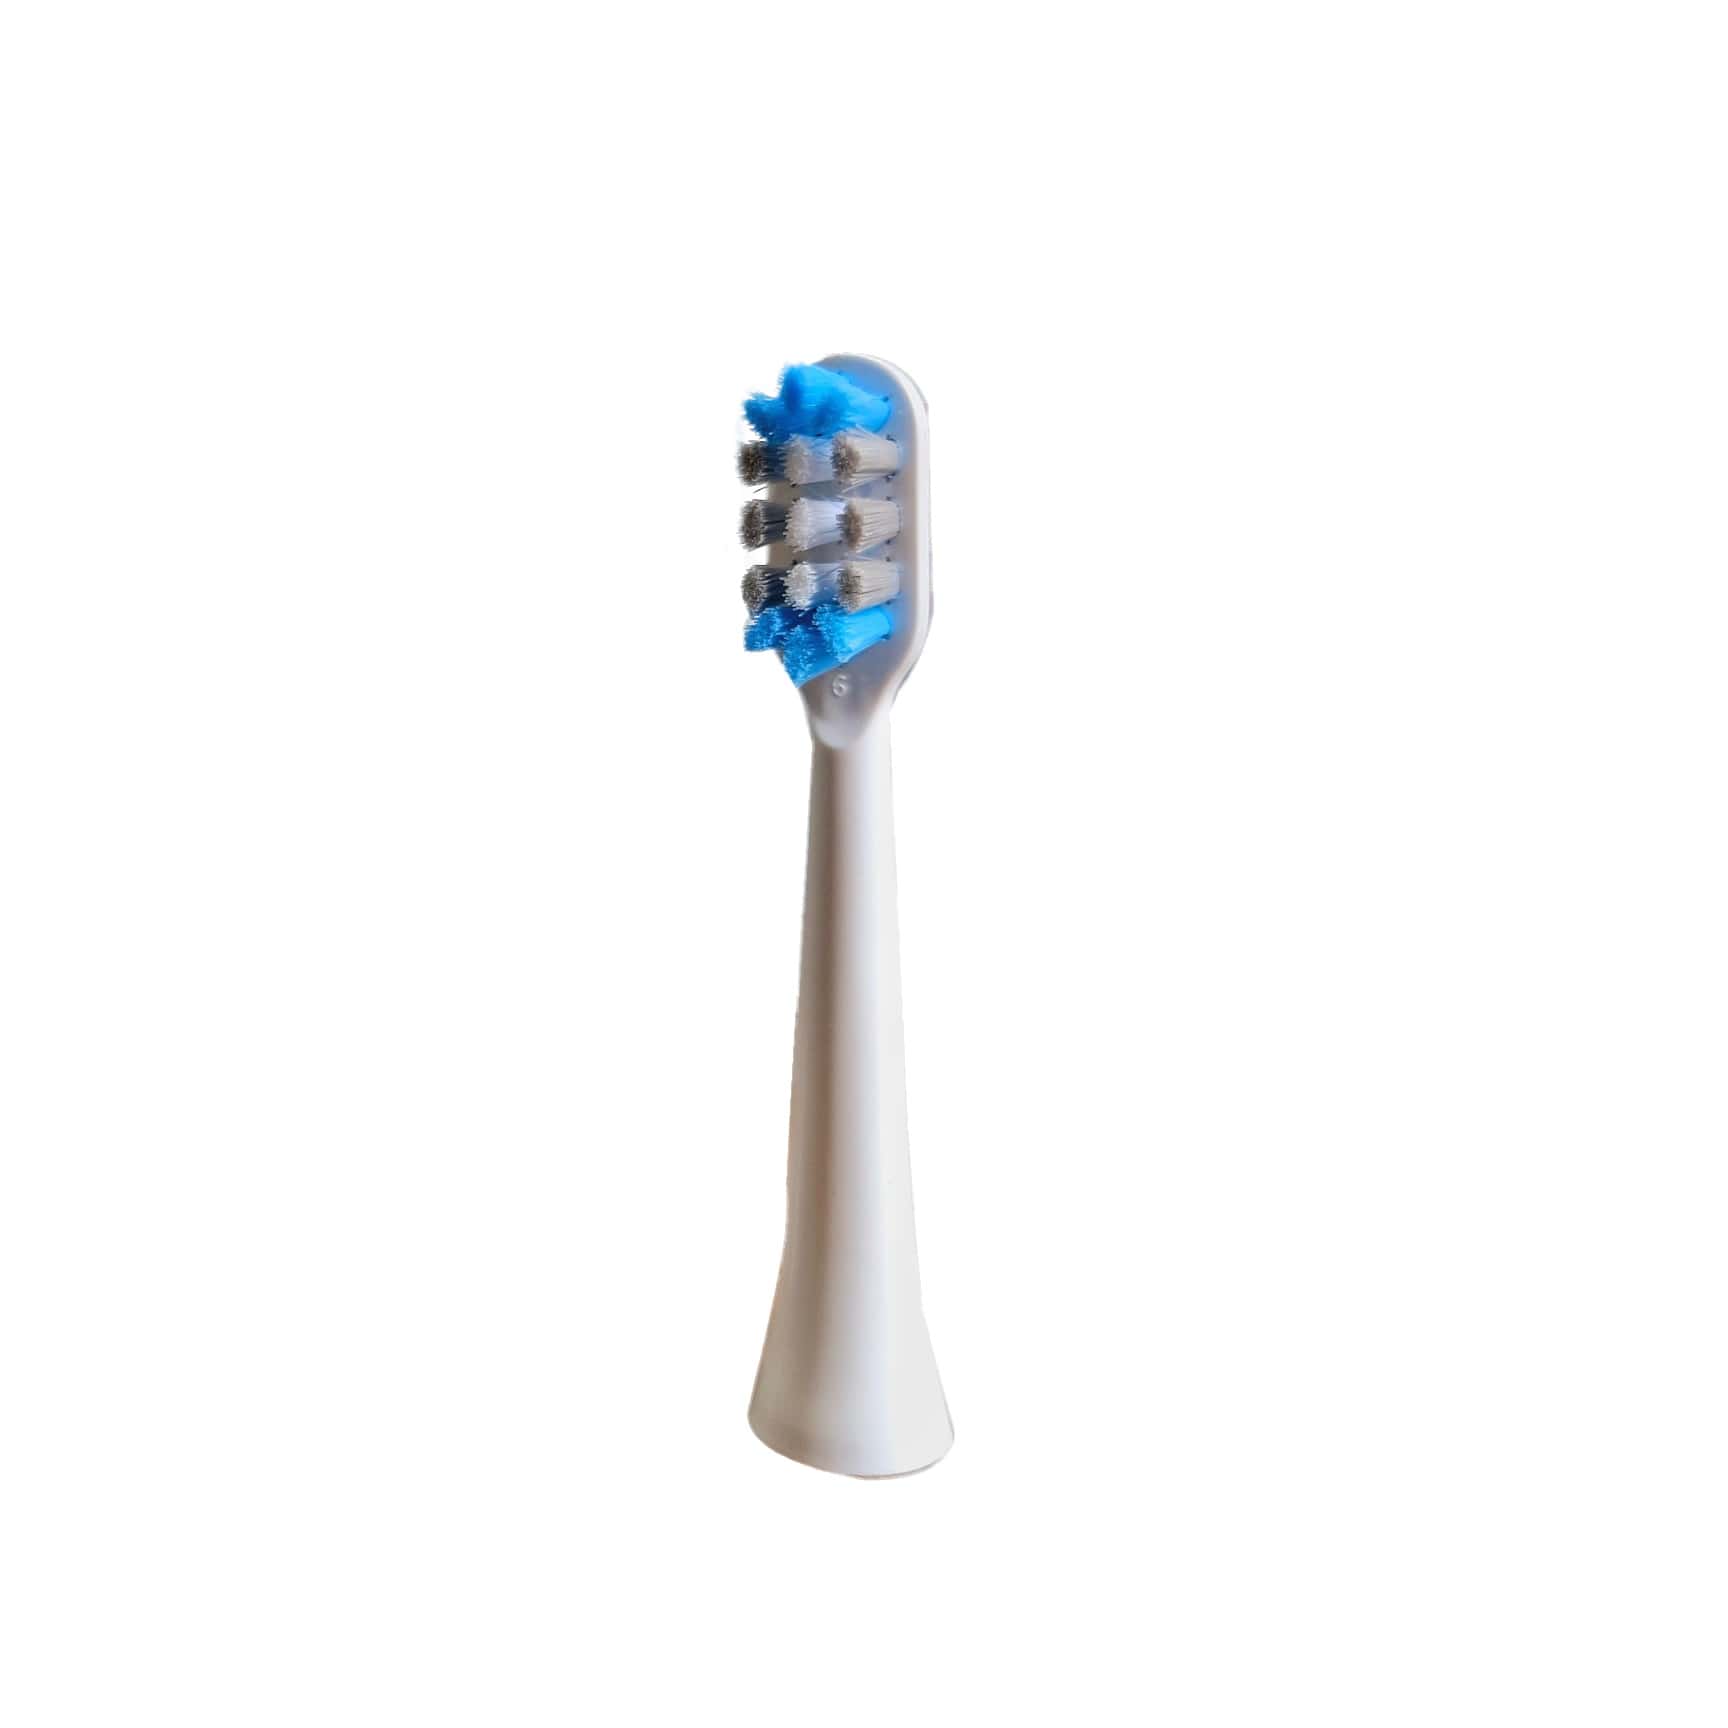 Enzo En-07 Electric Toothbrush